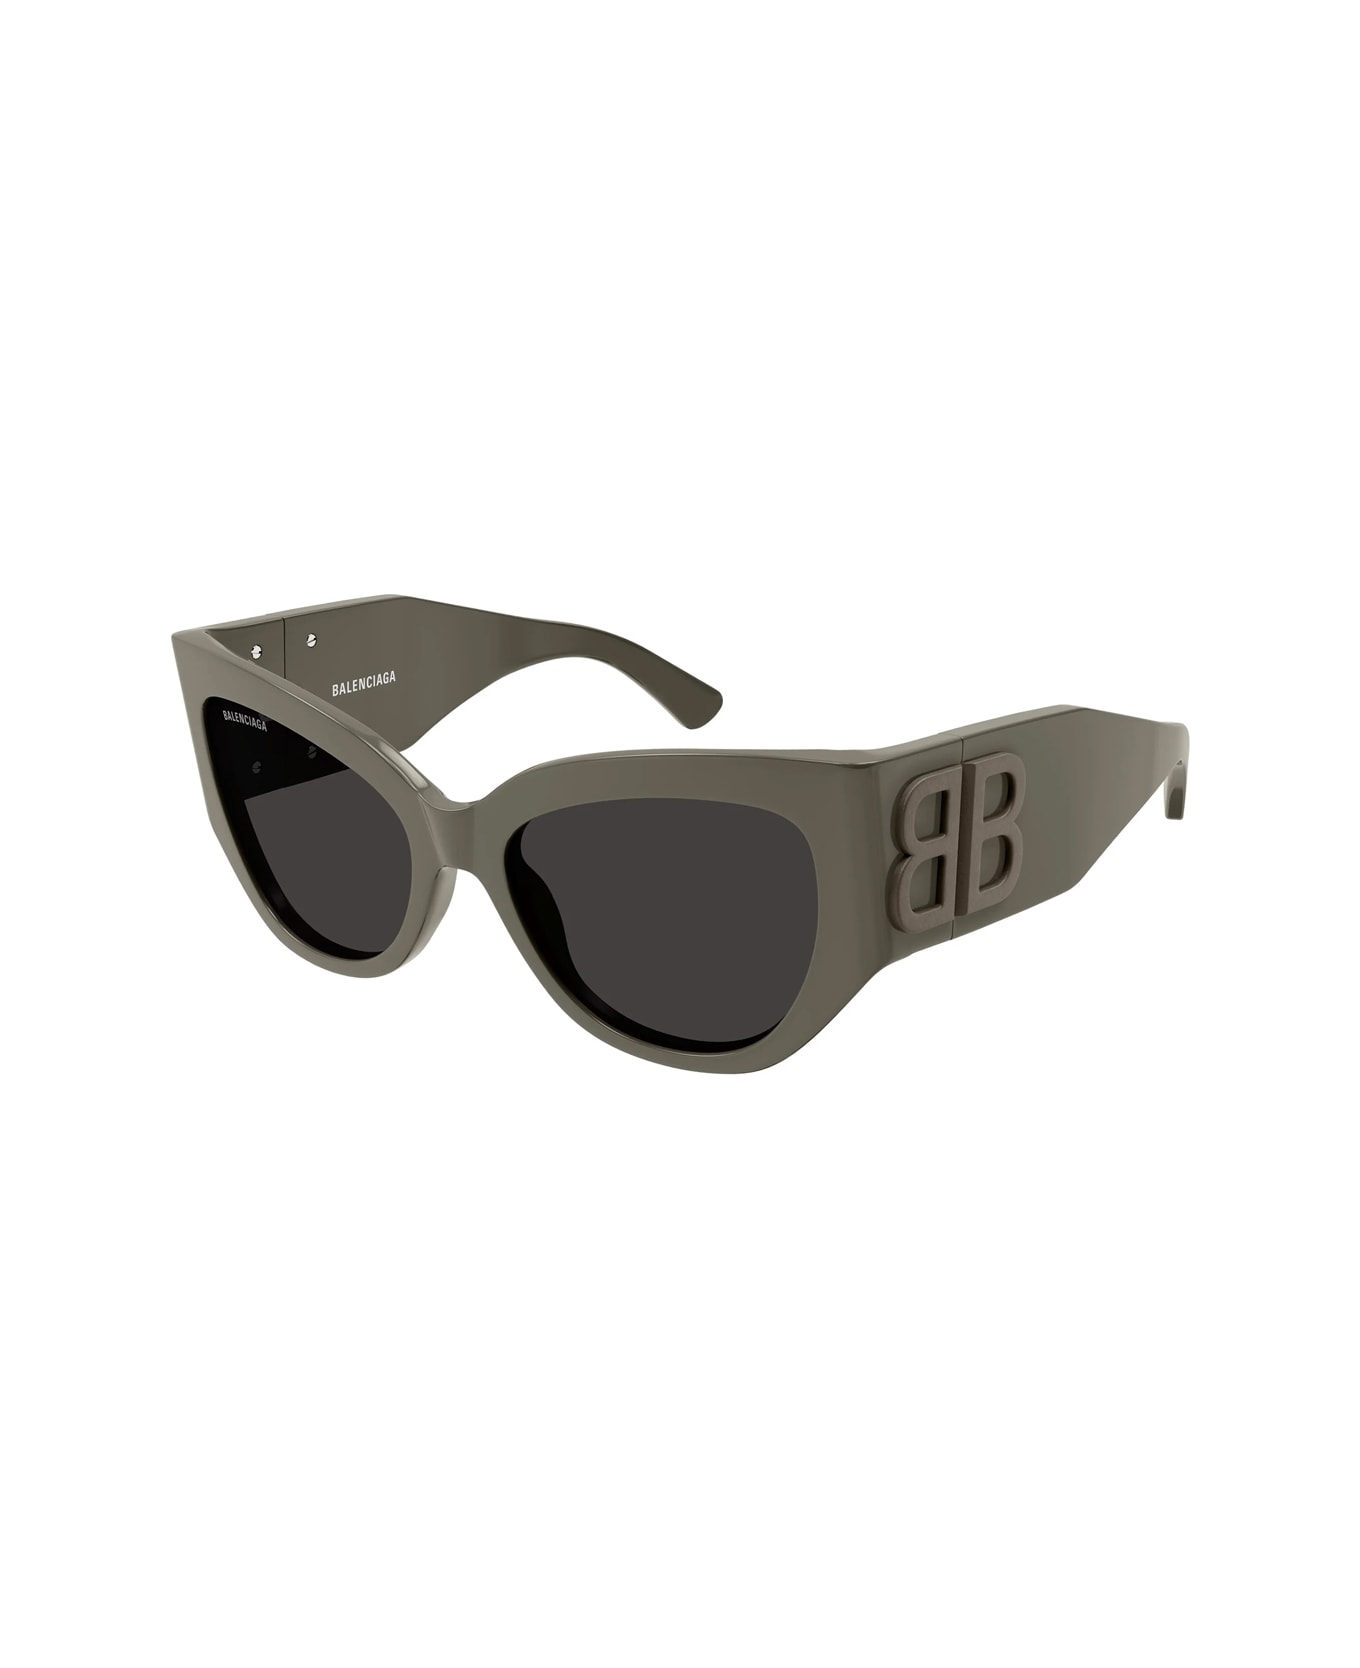 Balenciaga Eyewear Dinasty-linea Everyday Sunglasses - 004 BROWN BROWN GREY